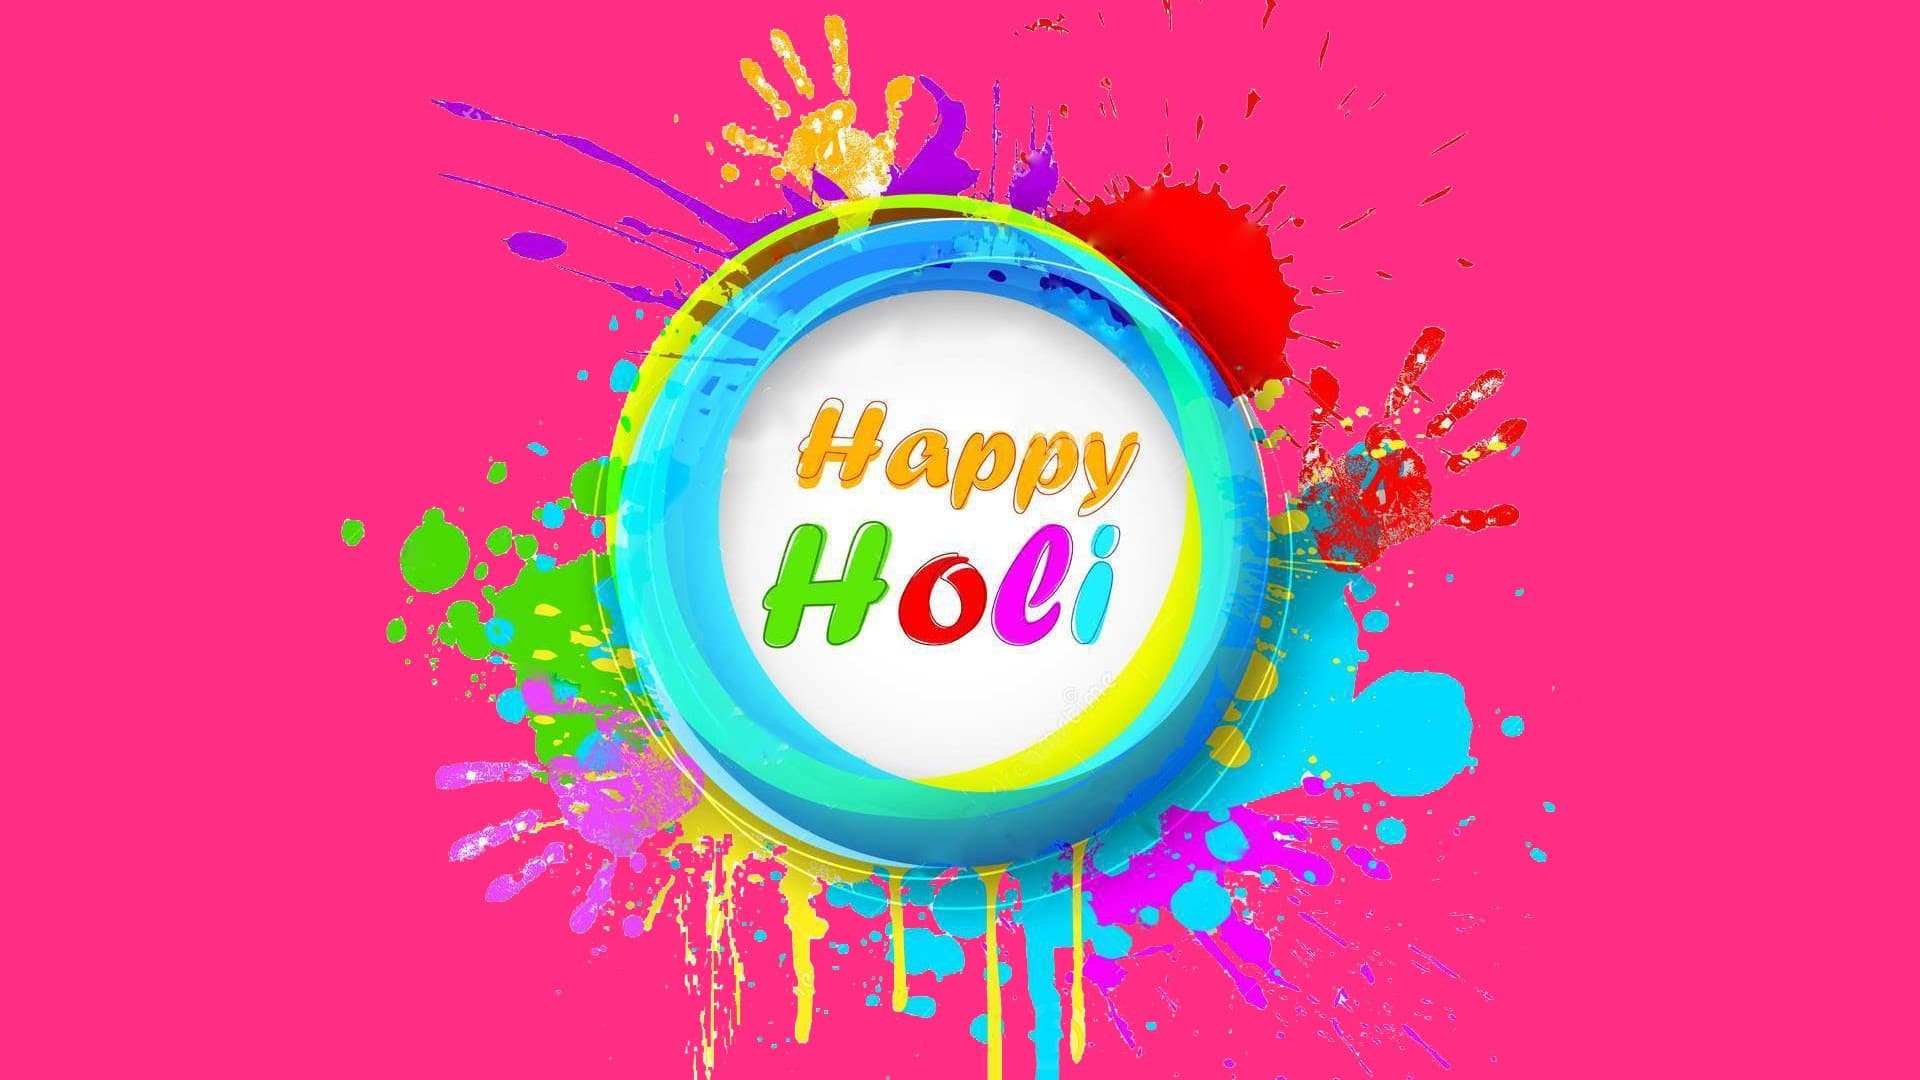 Happy Holi Greeting Cards 2018